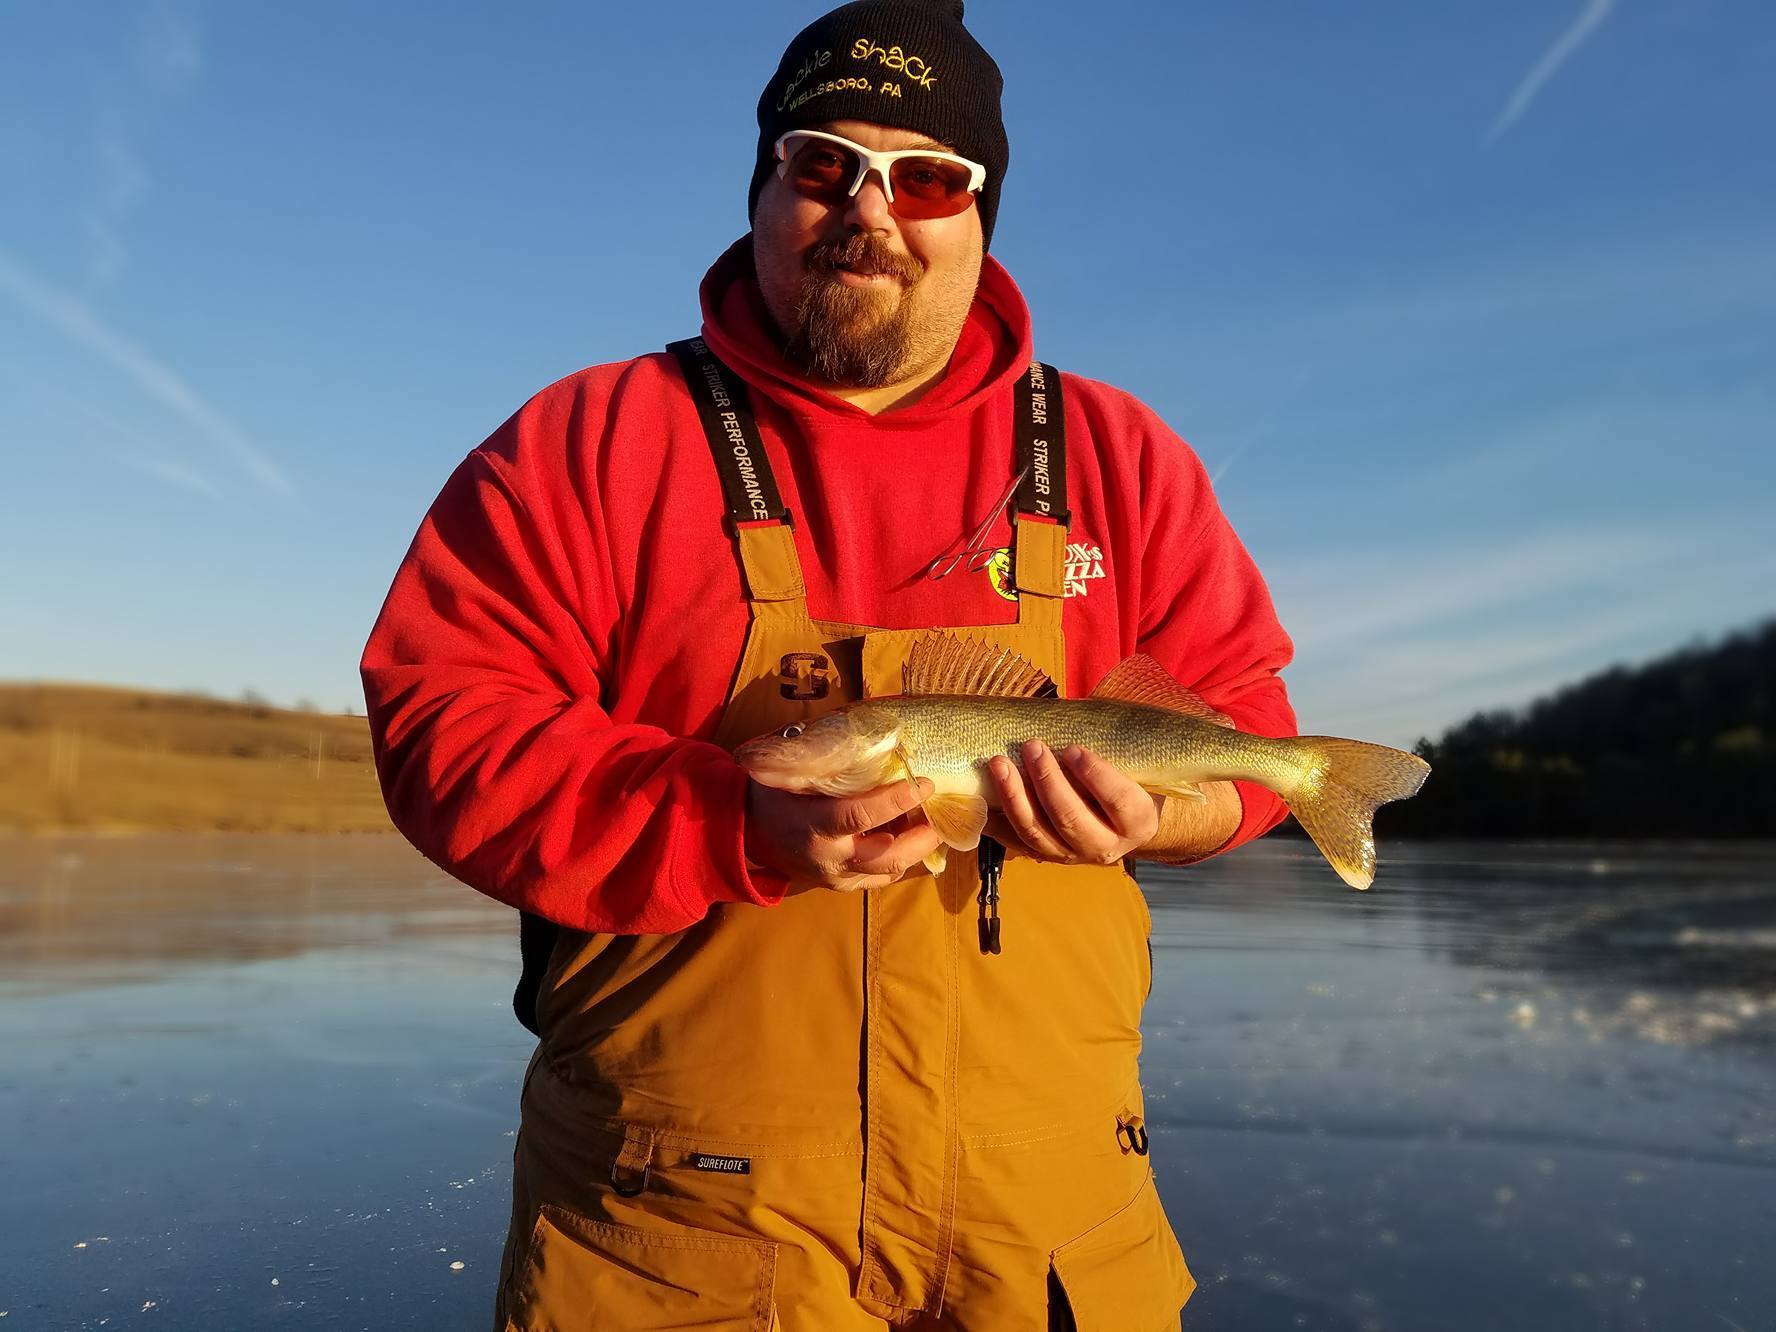 1/20/17 Tioga County Ice Update.  Hills Creek Lake & Beechwood Lakes in great shape! Fish biting!